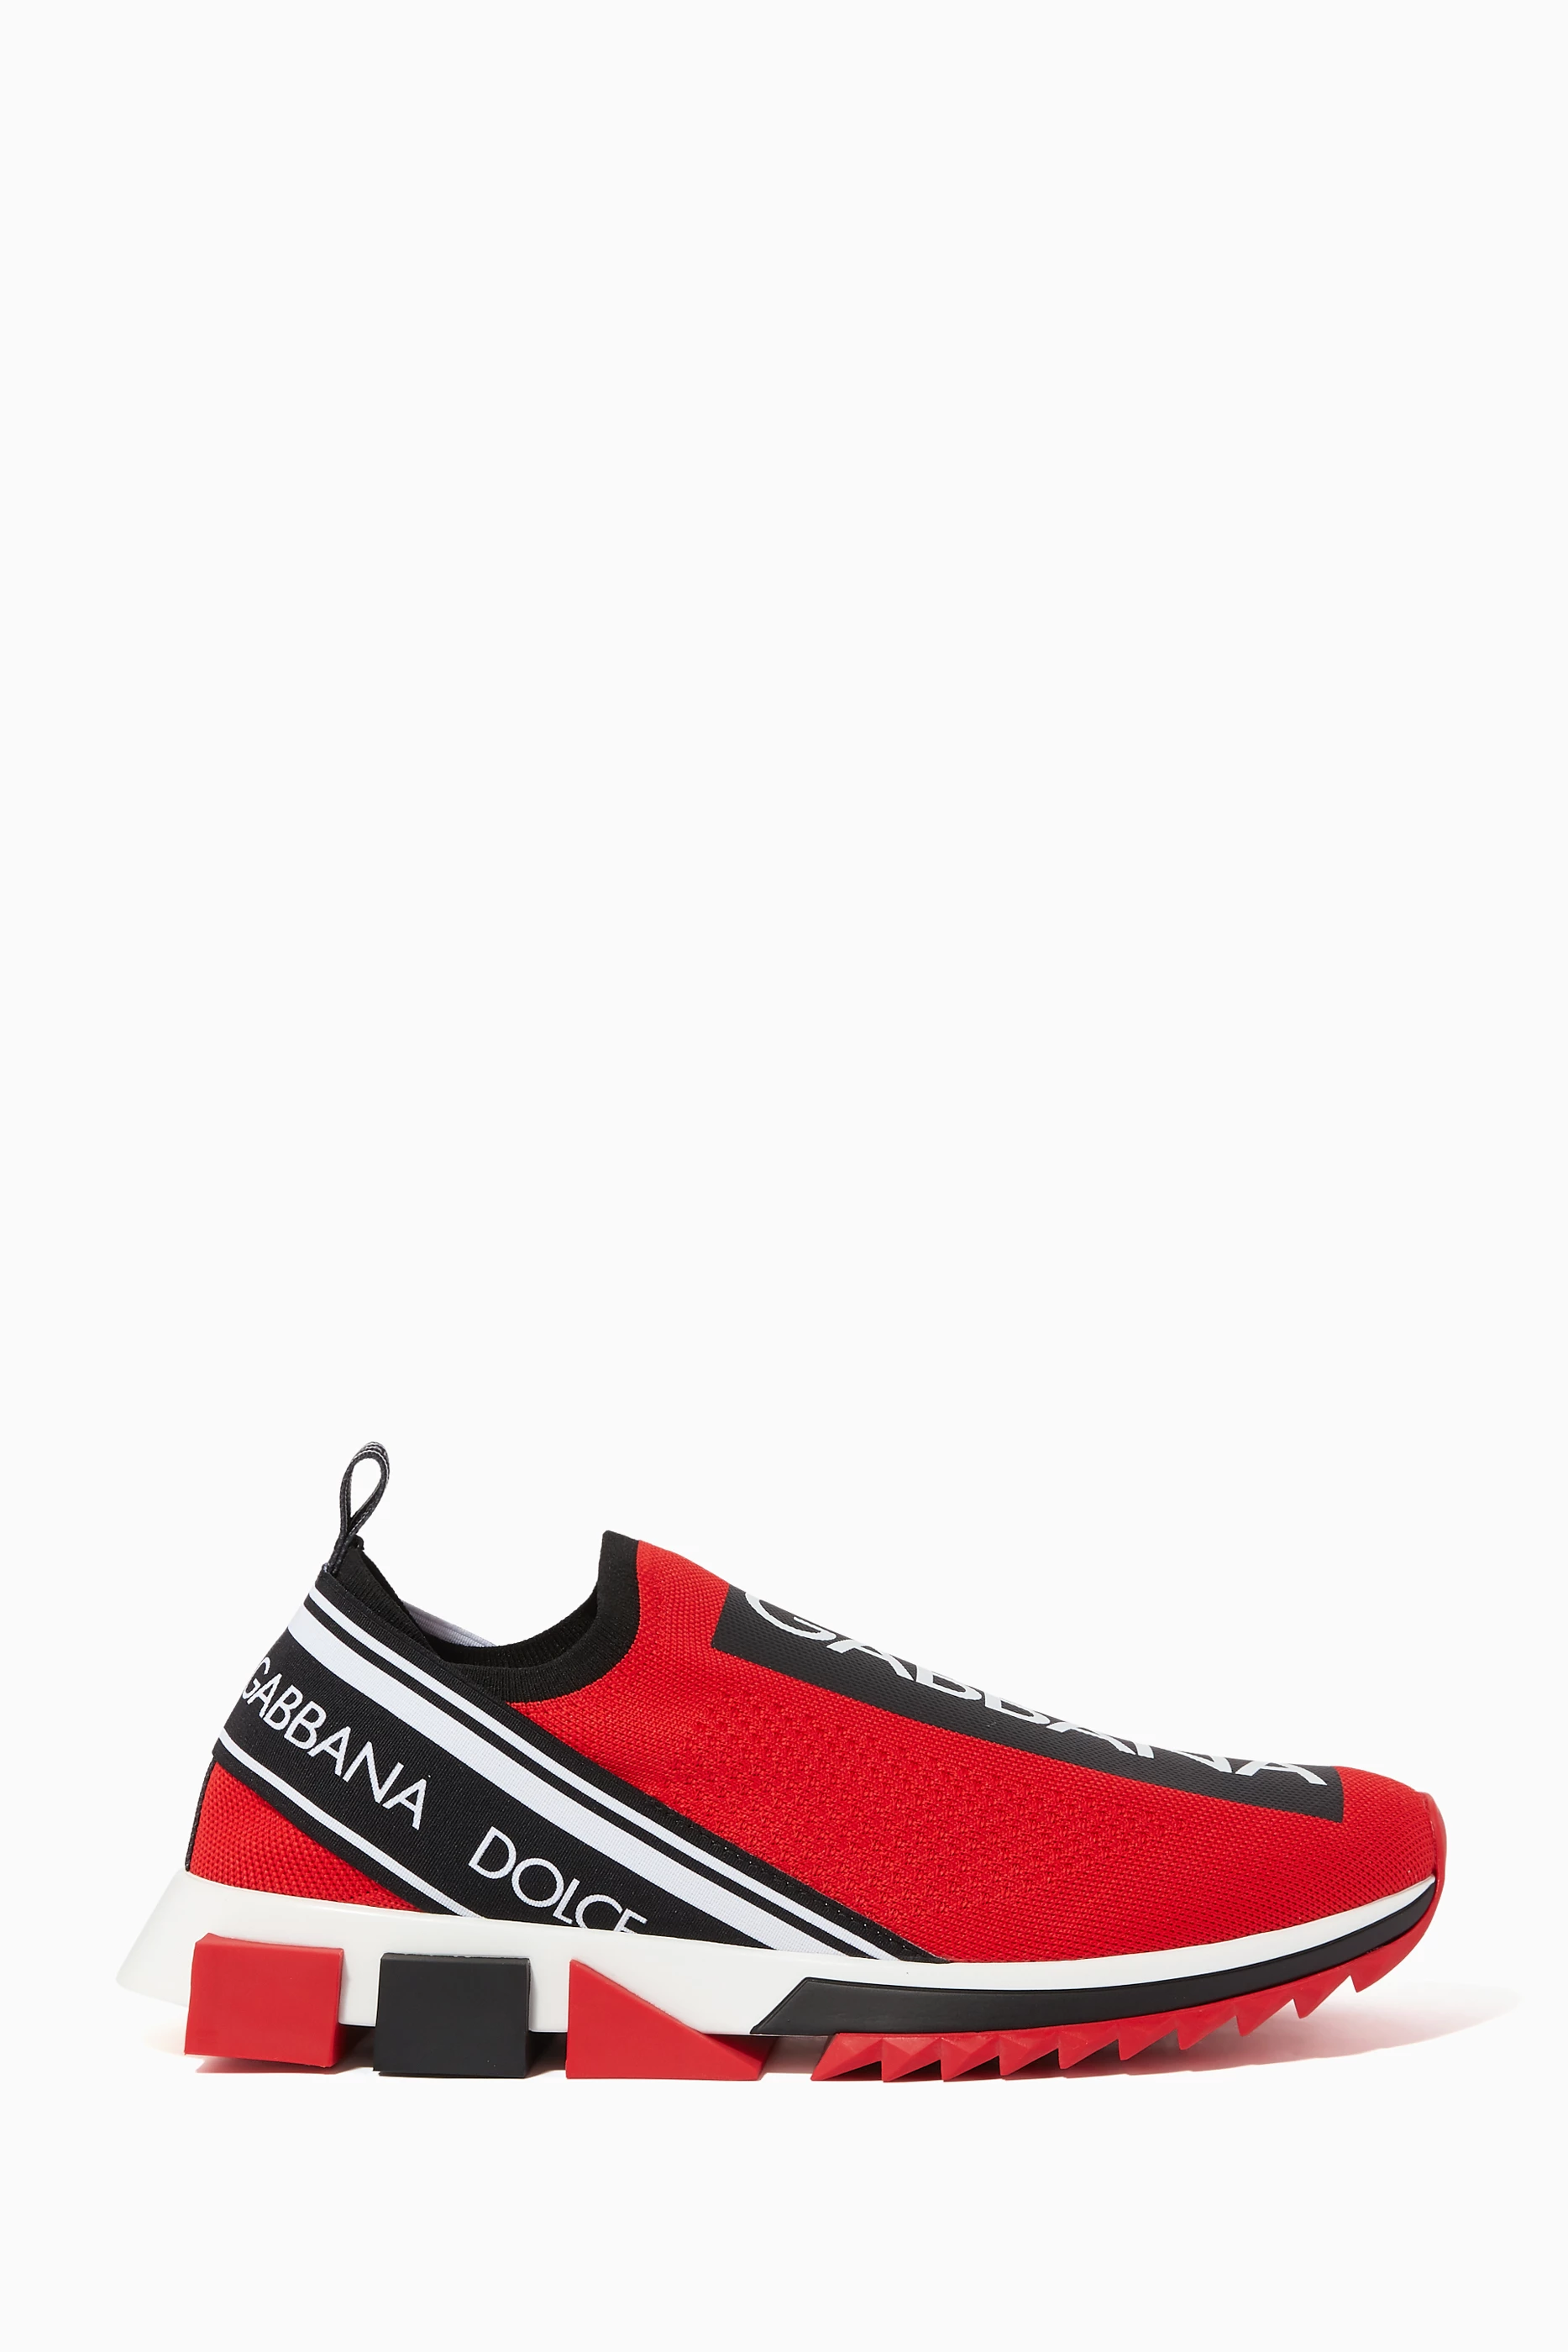 Shop Dolce & Gabbana Red Sorrento Stretch-Knit Sneakers for MEN | Ounass  Saudi Arabia